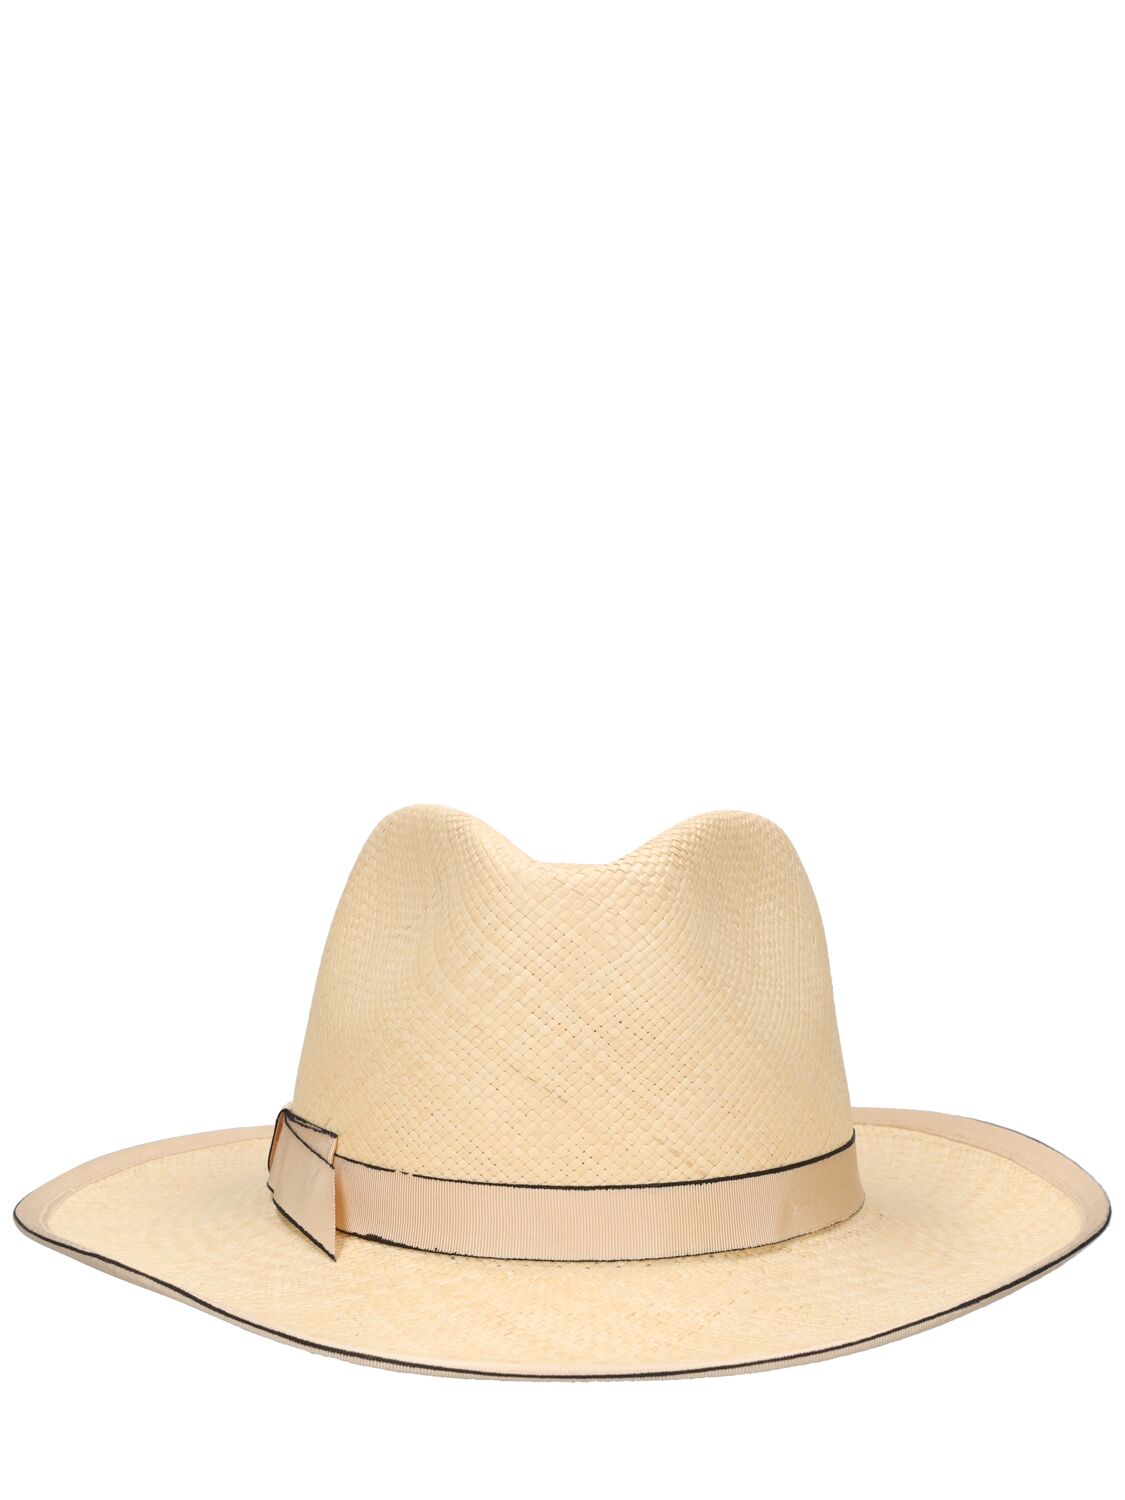 Borsalino Lewis Straw Panama Hat In Naturale